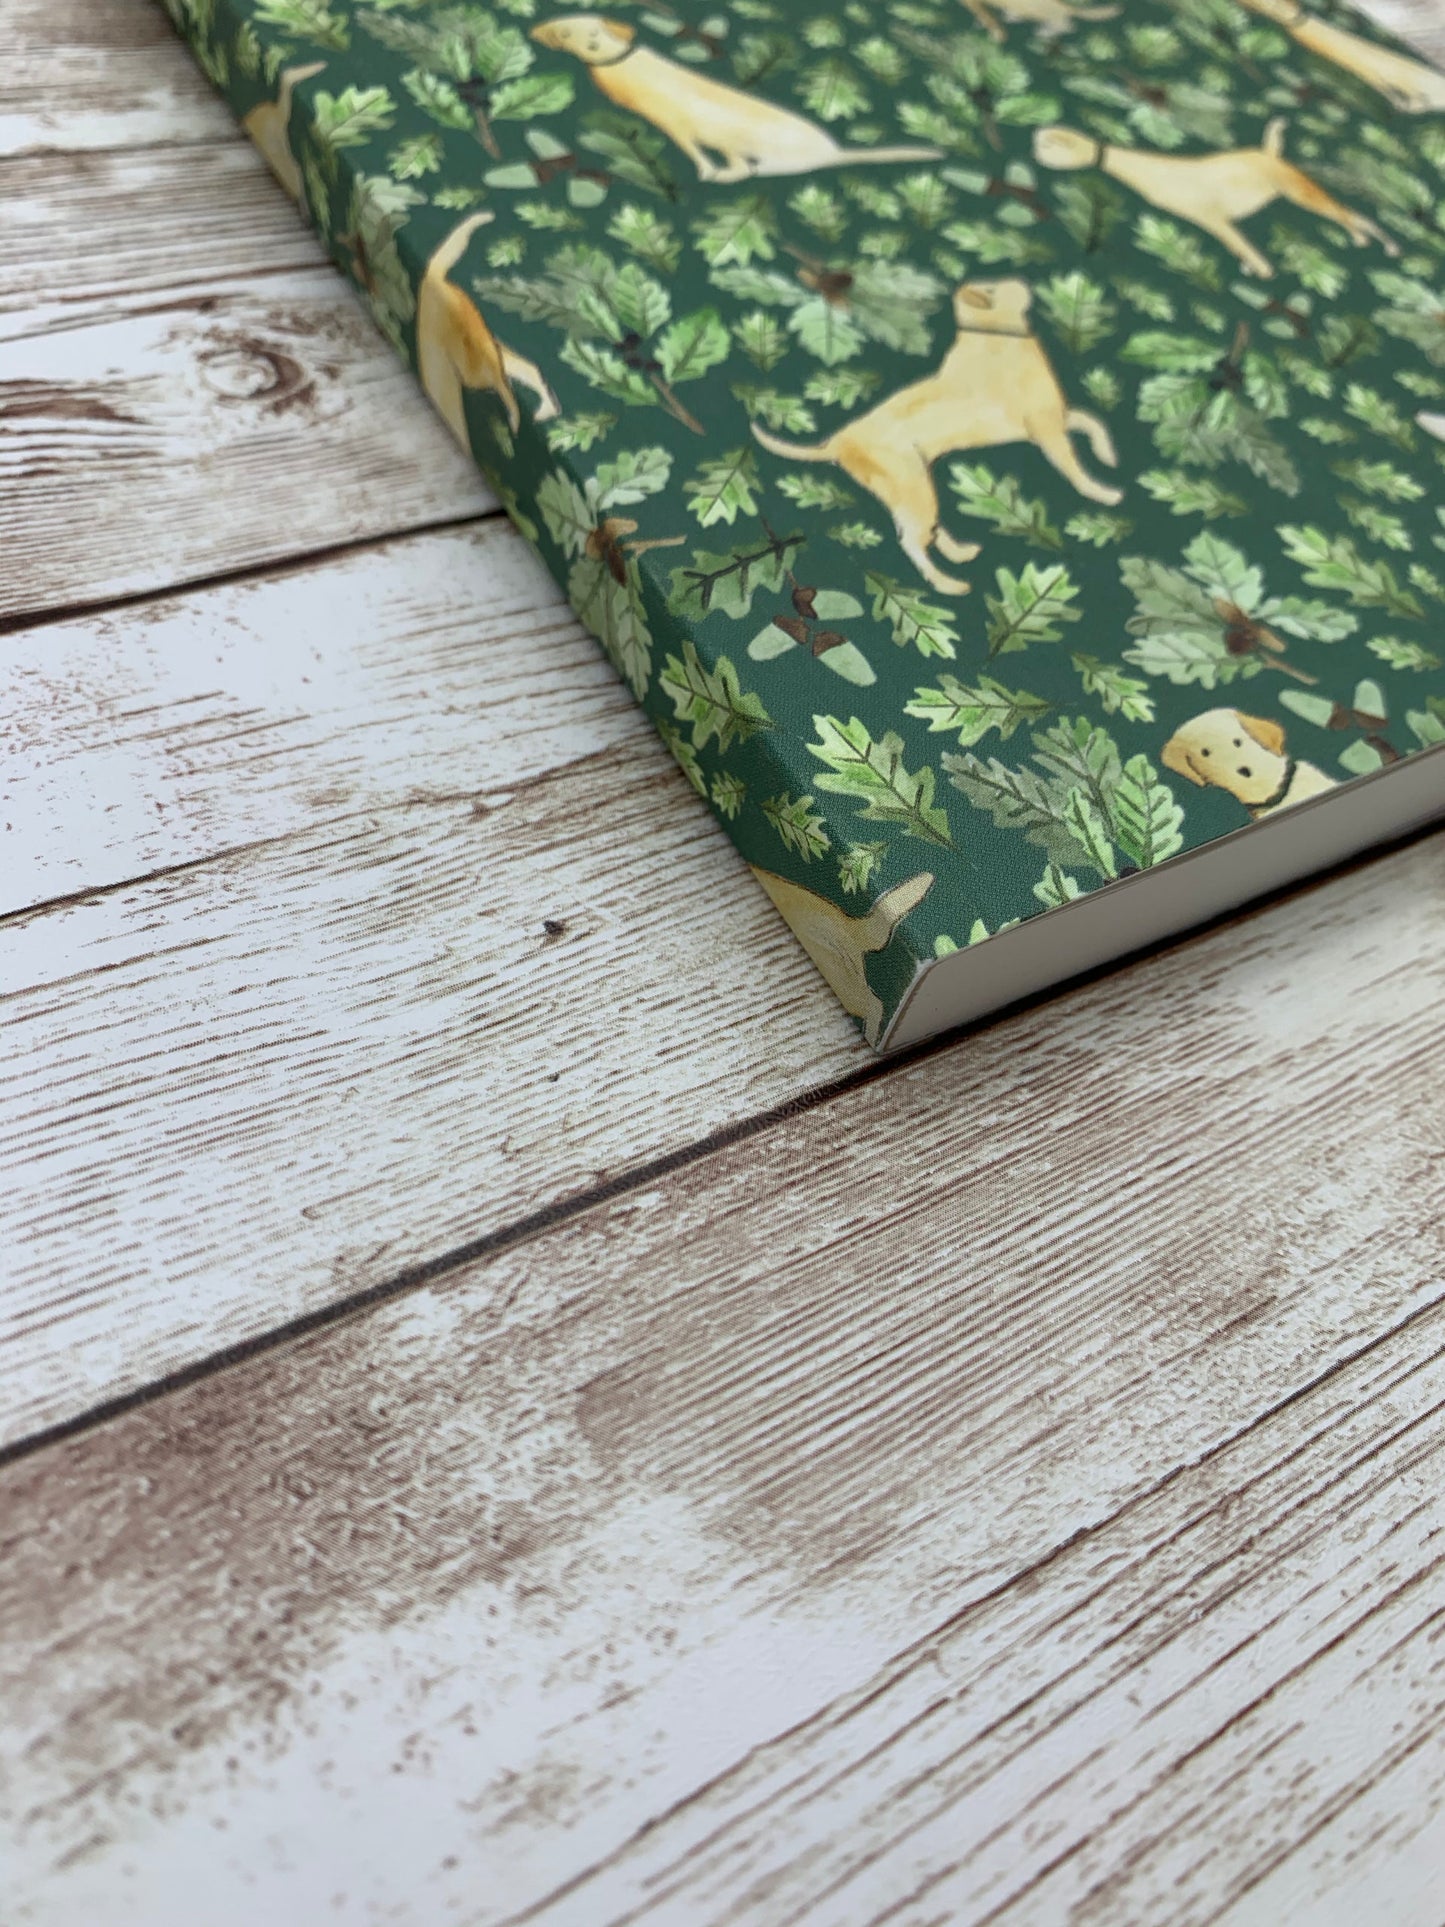 Golden Labrador notebook gift set